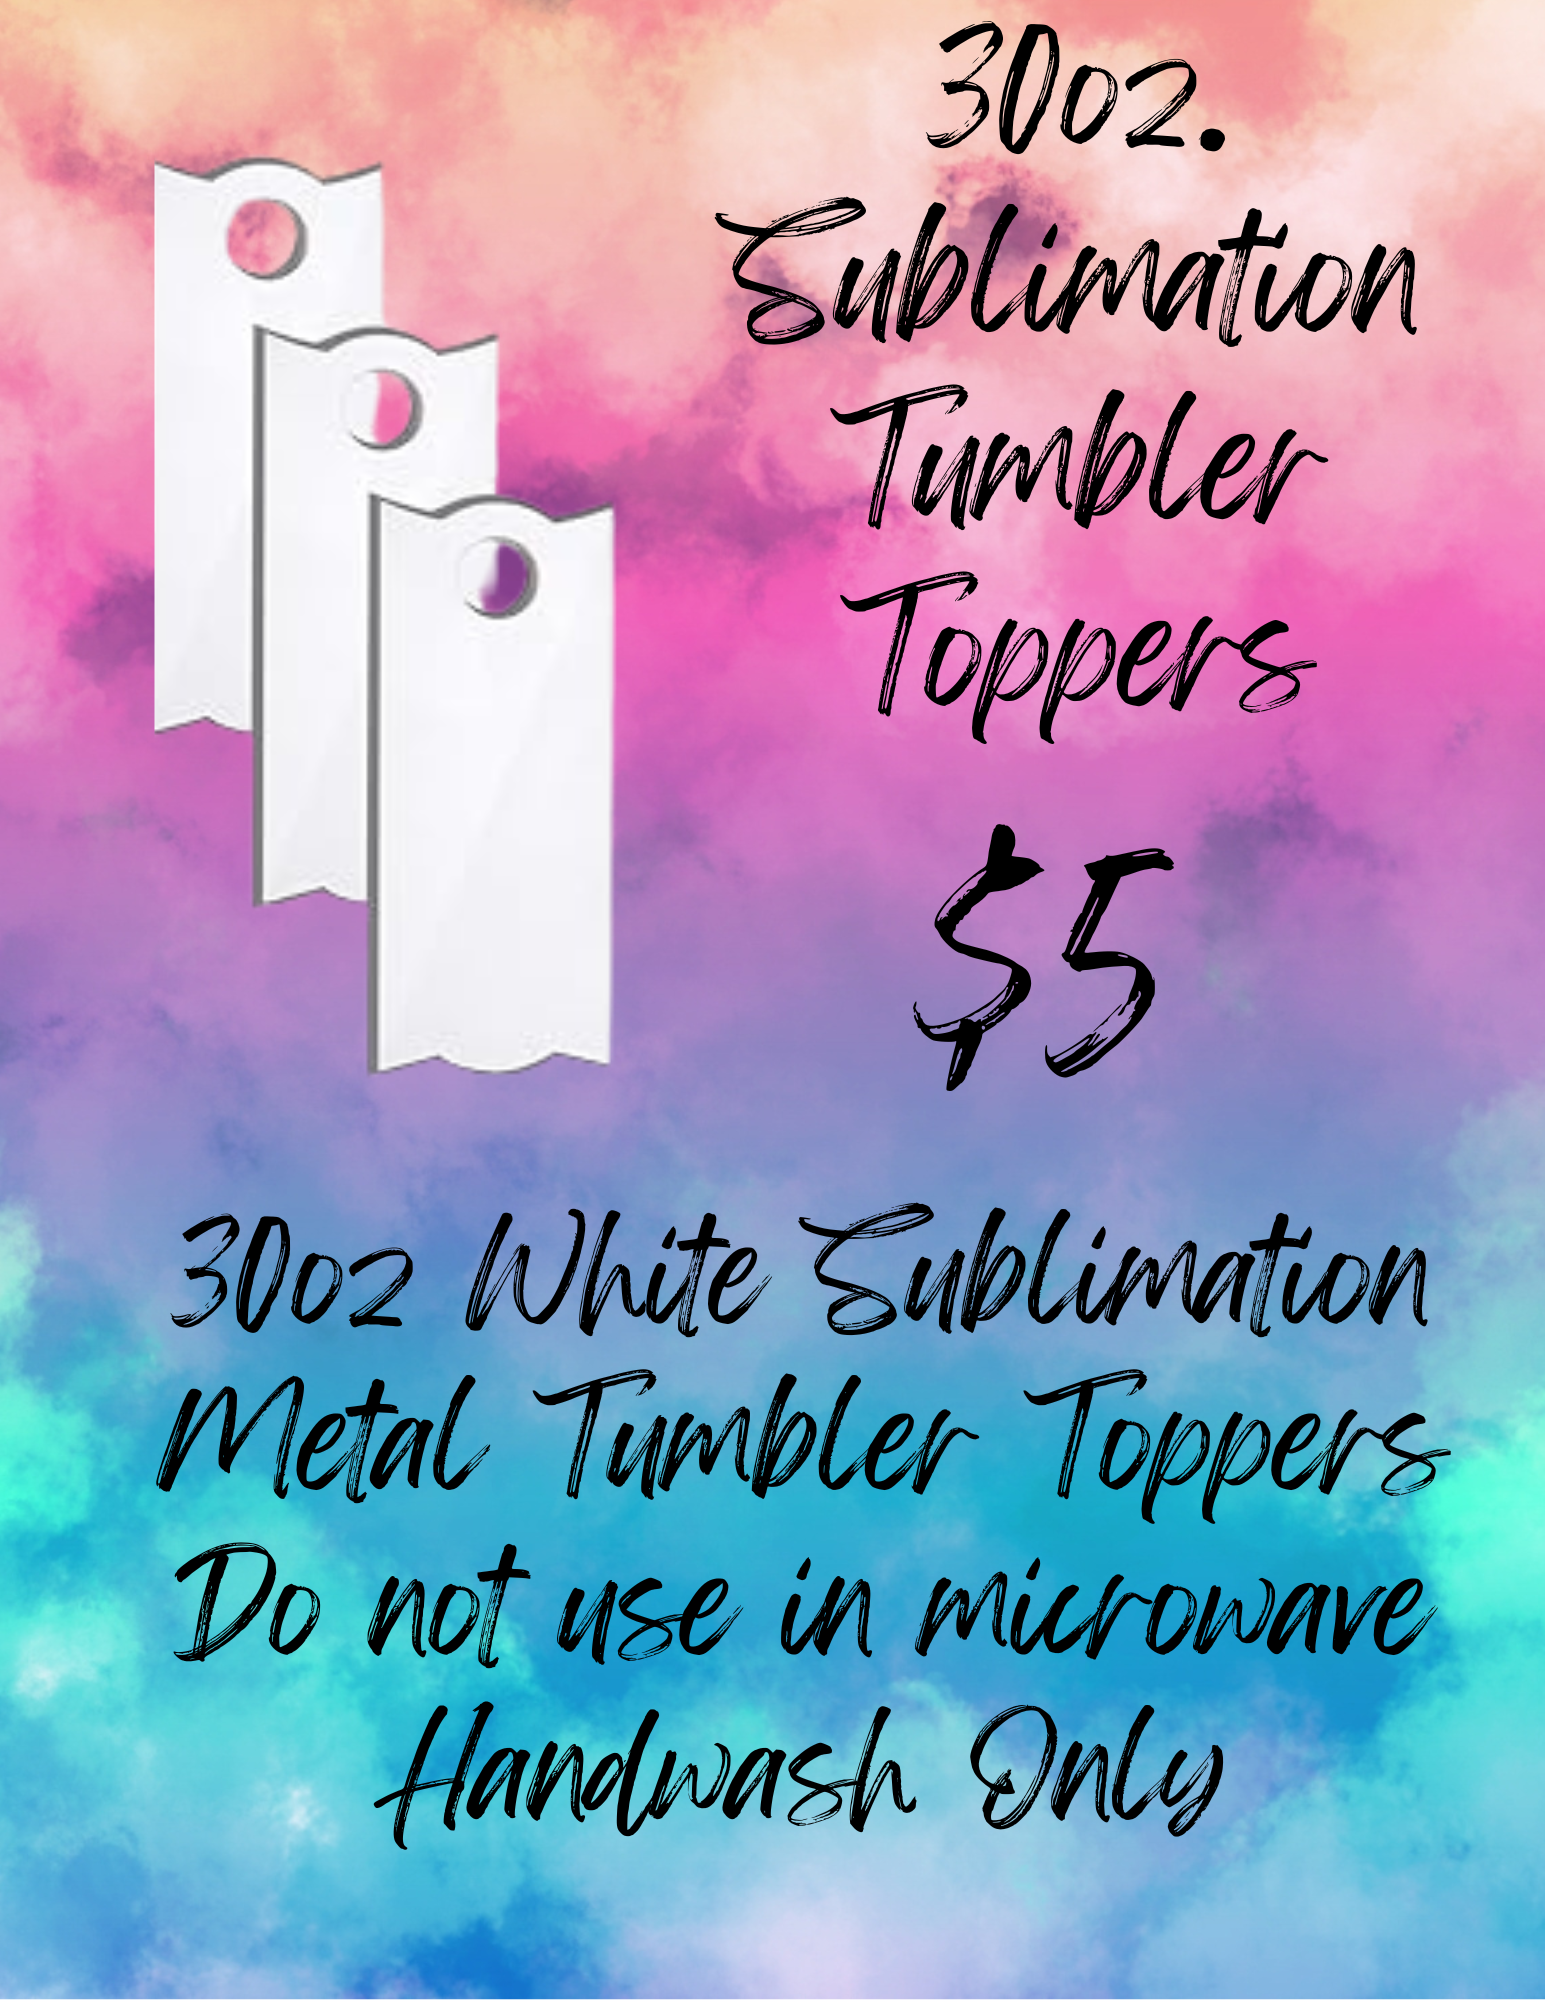 30oz Tumbler Toppers (Sublimation)